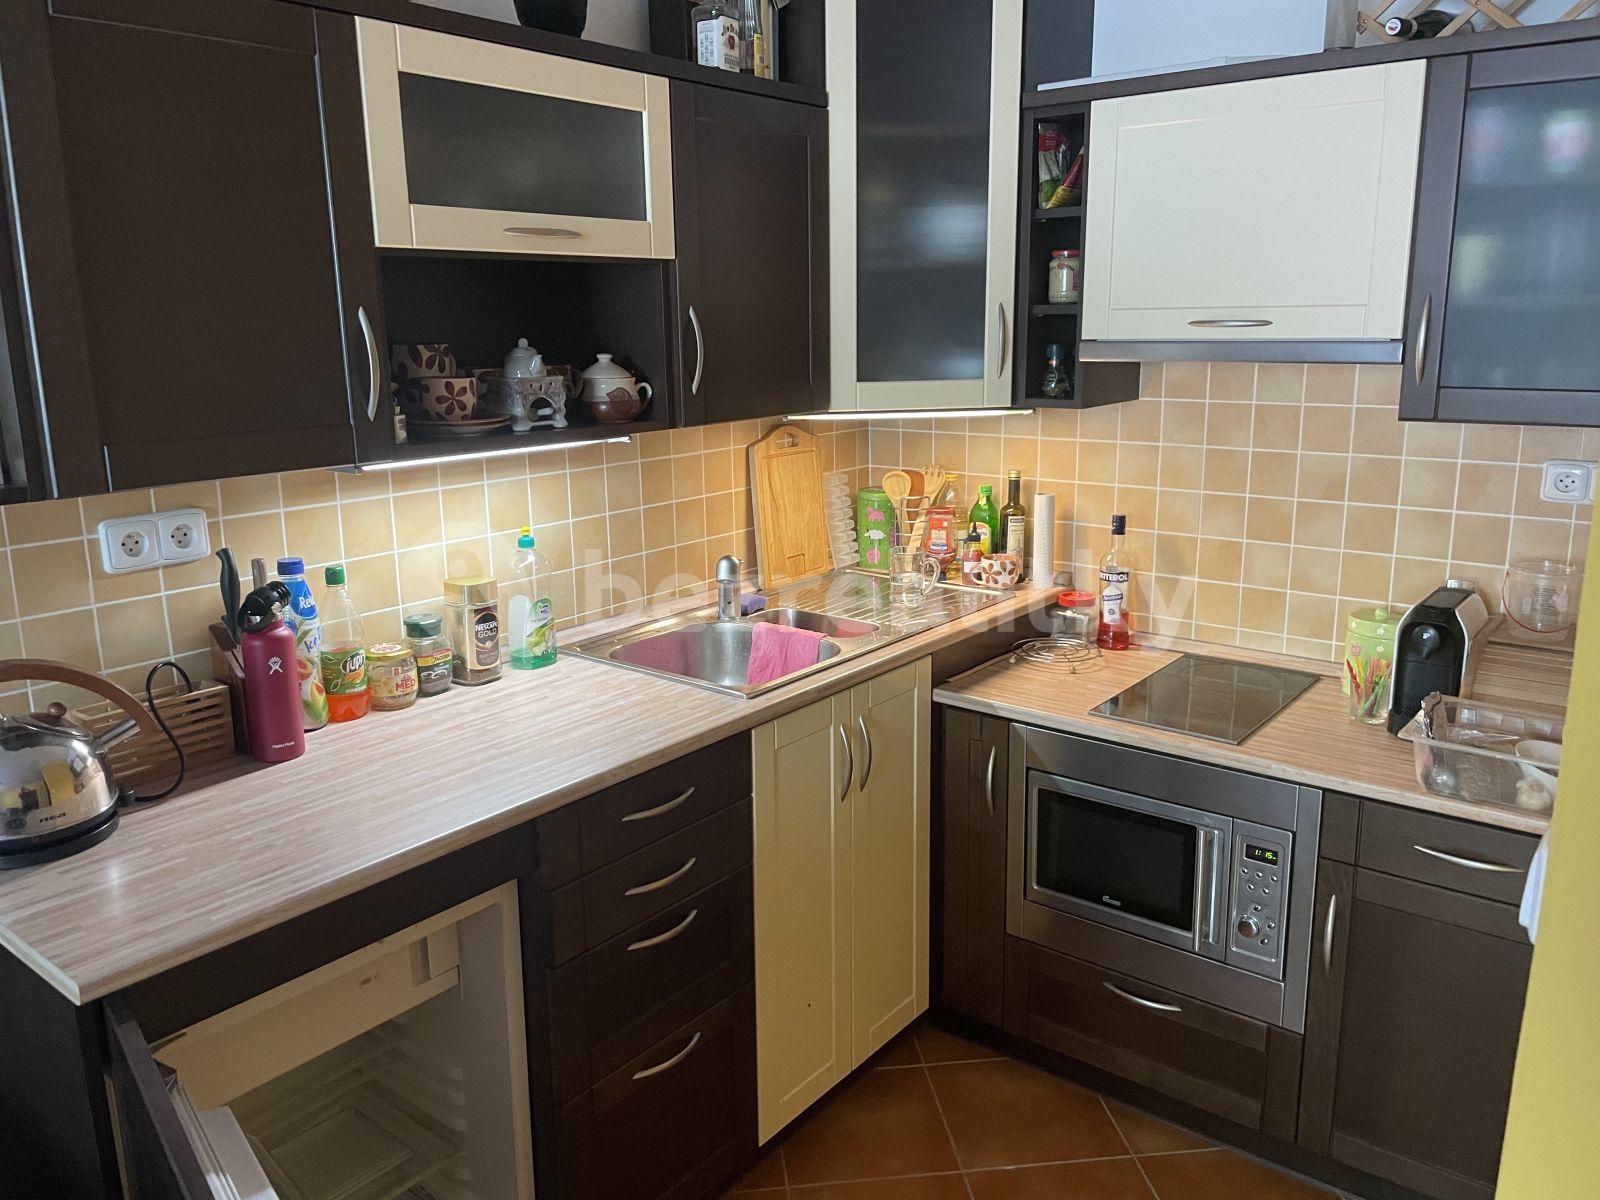 1 bedroom with open-plan kitchen flat for sale, 49 m², Rokytnice nad Jizerou, Liberecký Region